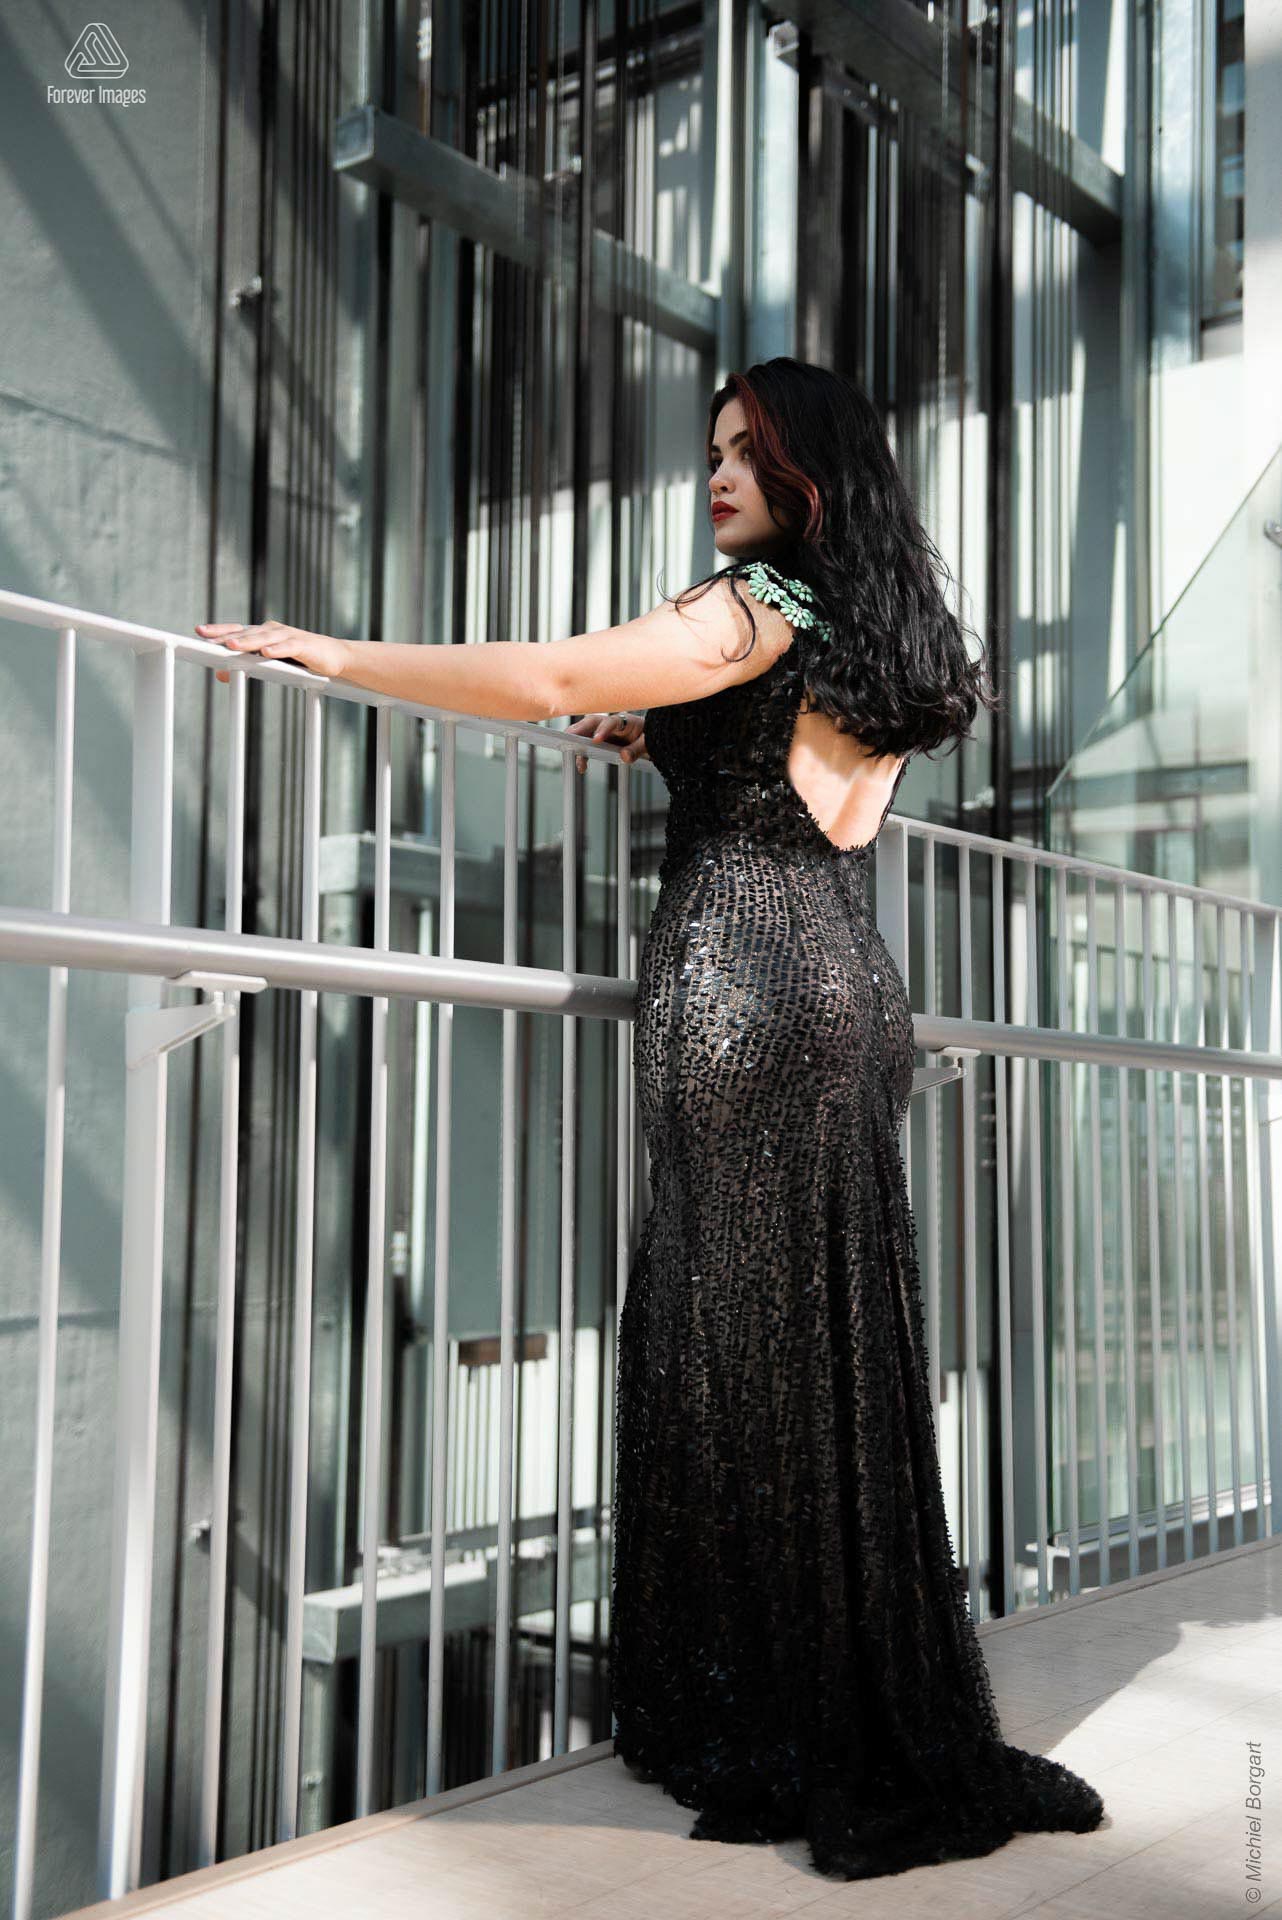 Fashionfoto glamour mooie dame bij open liftschacht zwarte jurk | Daphna Akkermans David Cardenas | Fashionfotograaf Michiel Borgart - Forever Images.